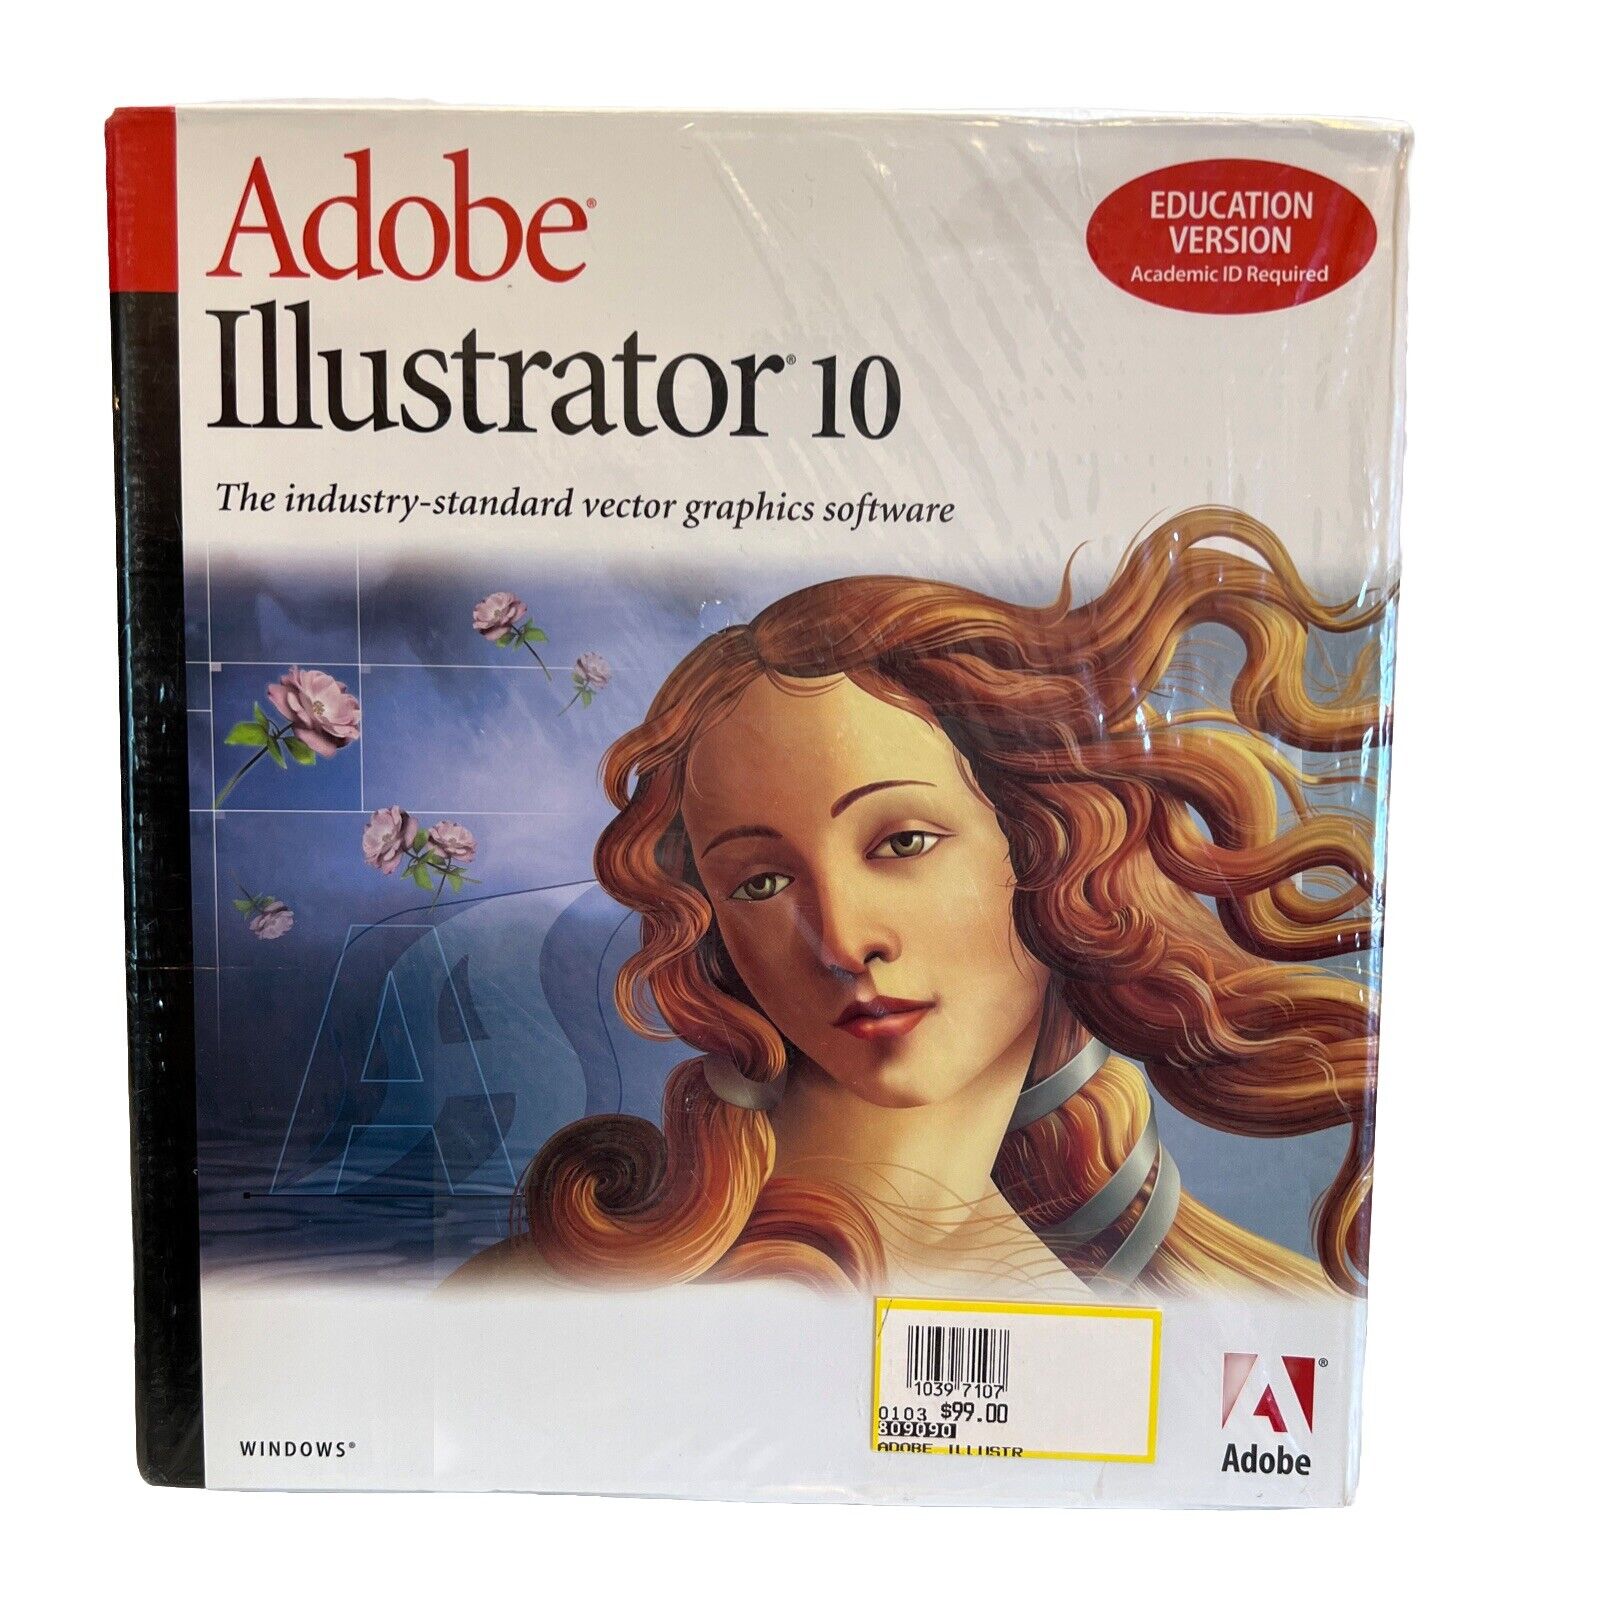 Adobe Illustrator 10 Macintosh Education Version Computer Software Serial Number